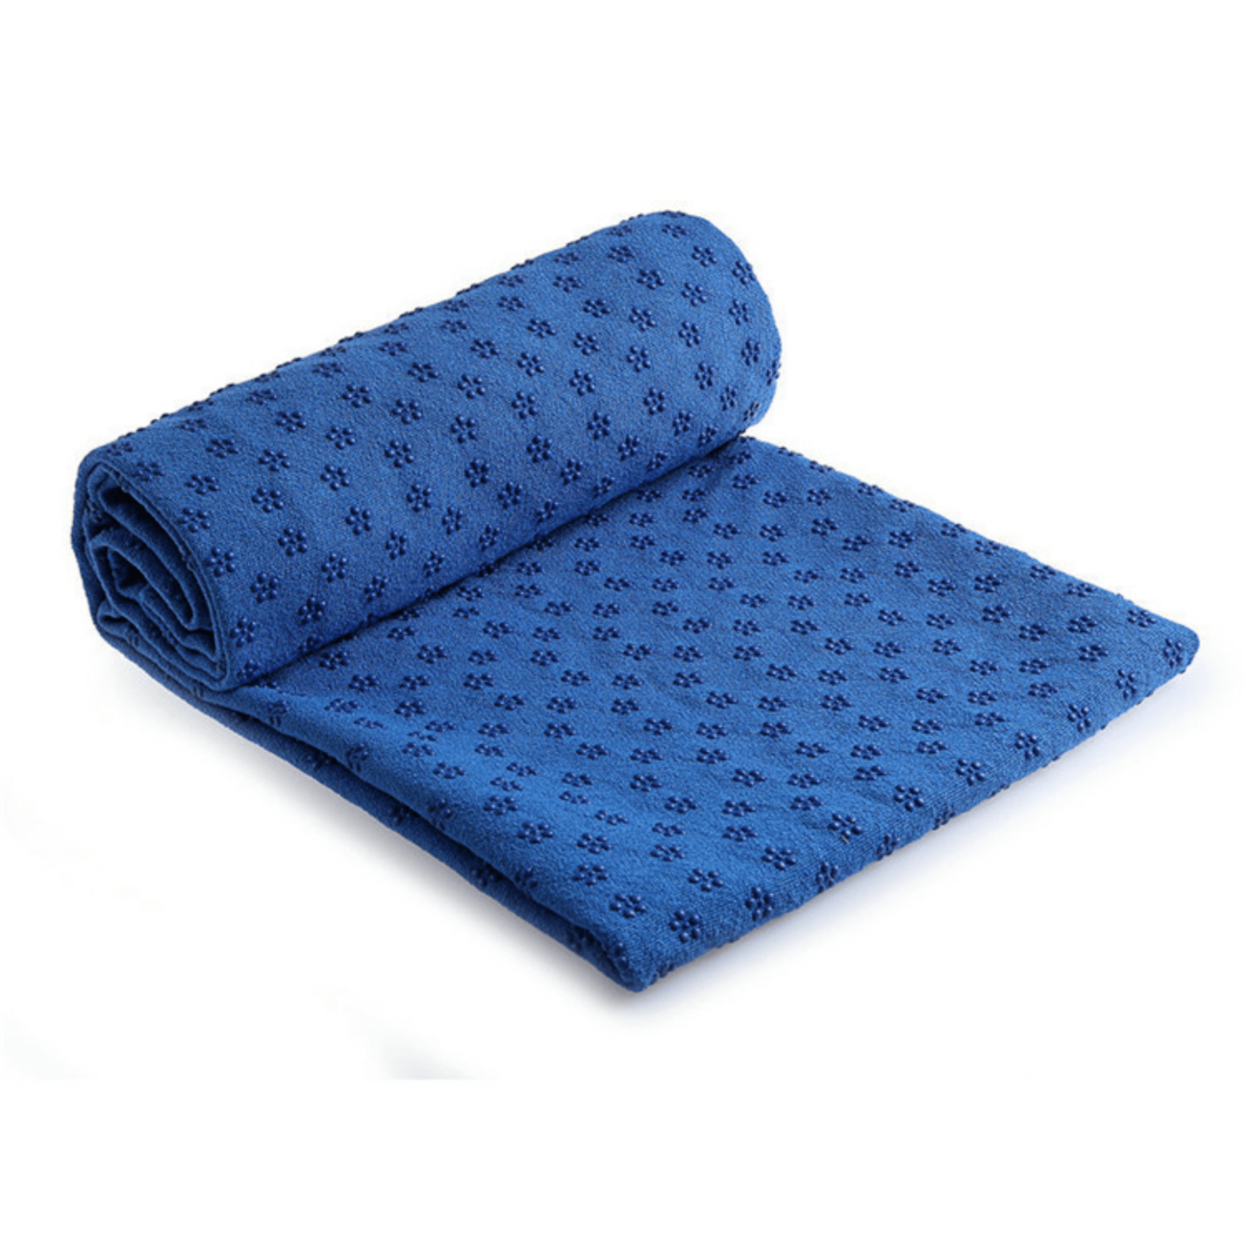 Premium Absorption Hot Yoga Mat Towel With Slip-Resistant Grip Dots - Dark Blue